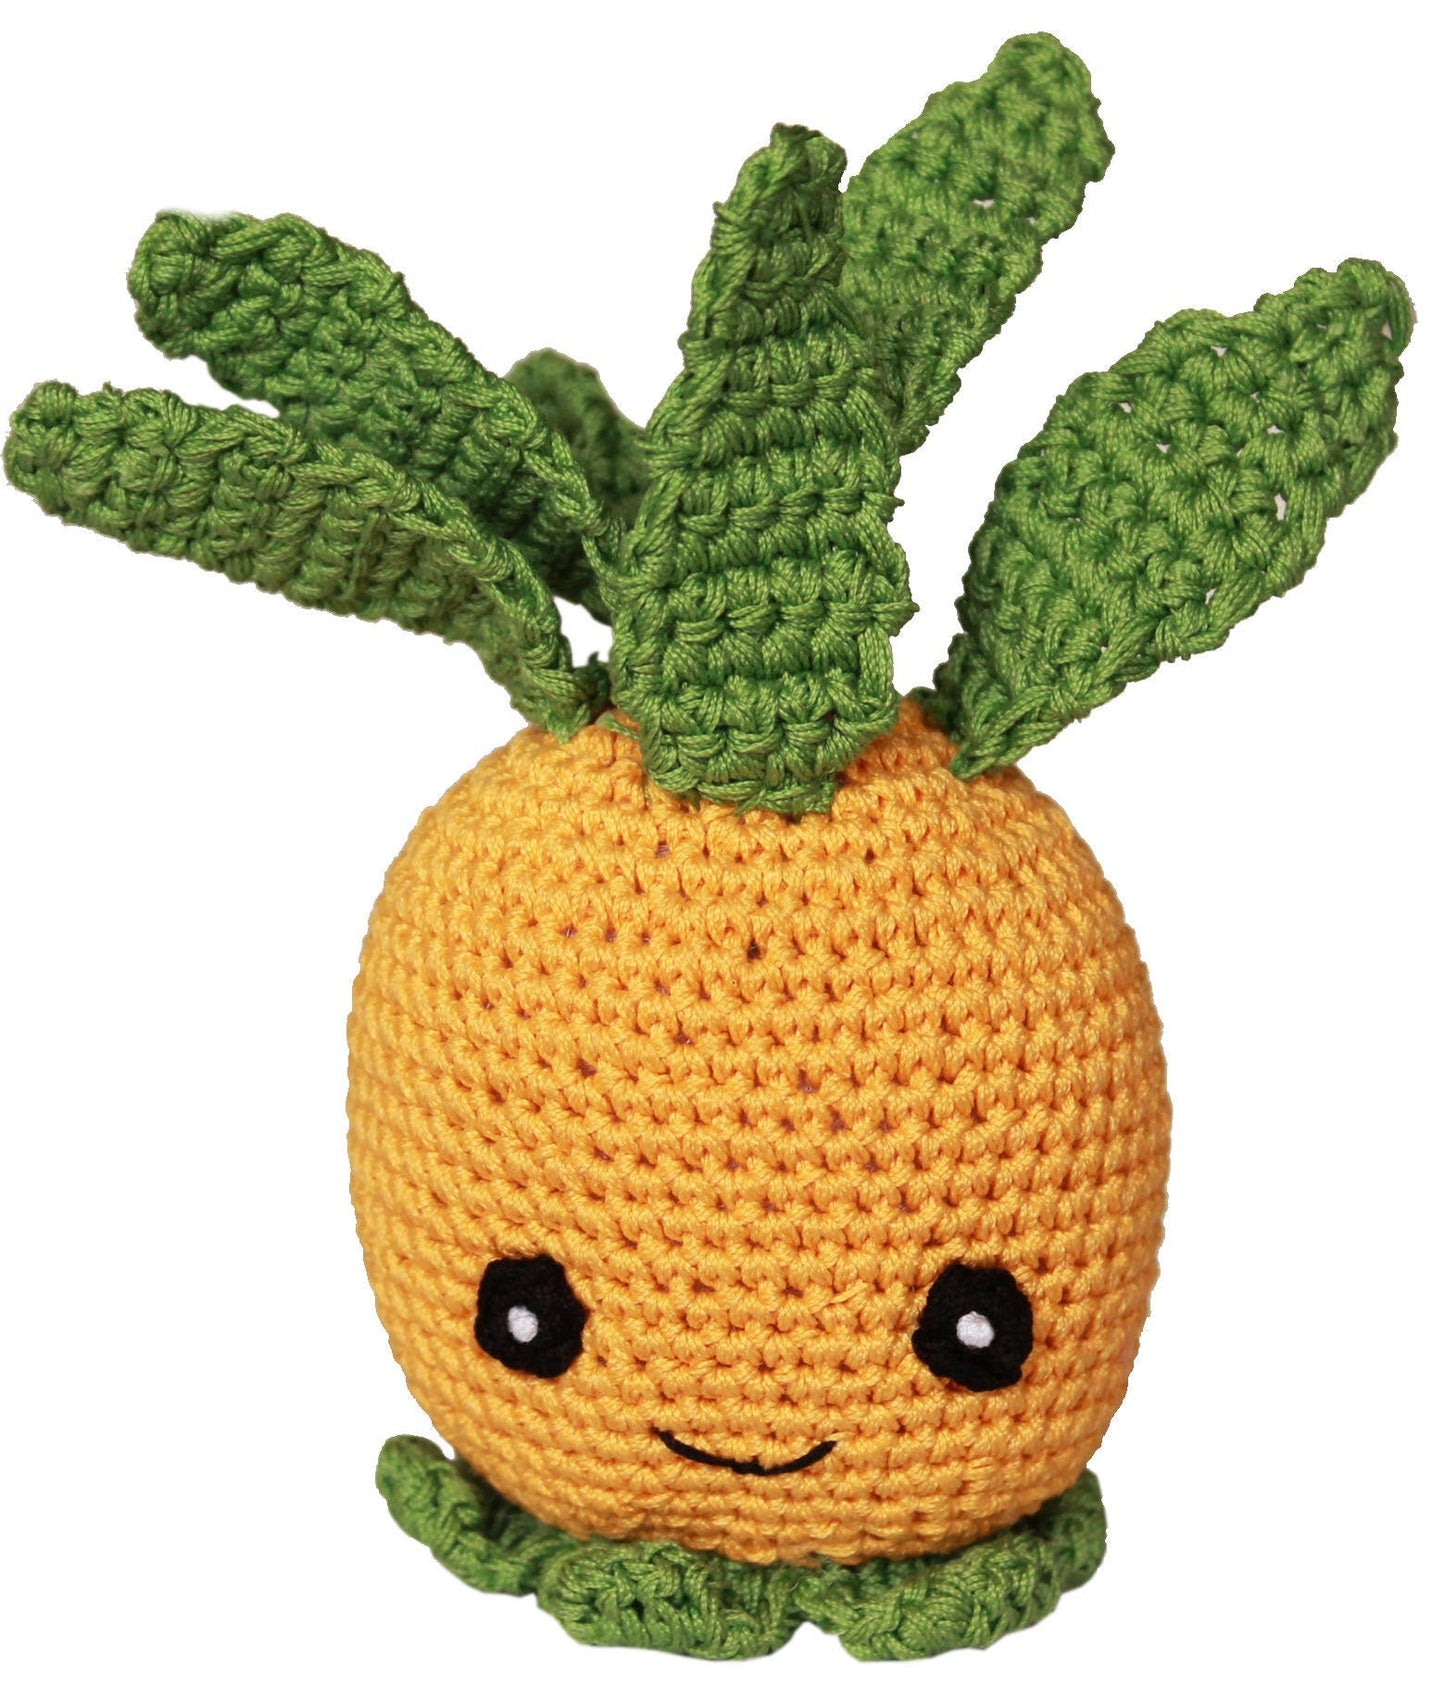 Knit Knacks Organic Cotton Pet & Dog Toys, "Fruits" (Choose from: Strawberries, Pear, Pineapple, Lemon, Chili Pepper, Avocado or Banana)-3